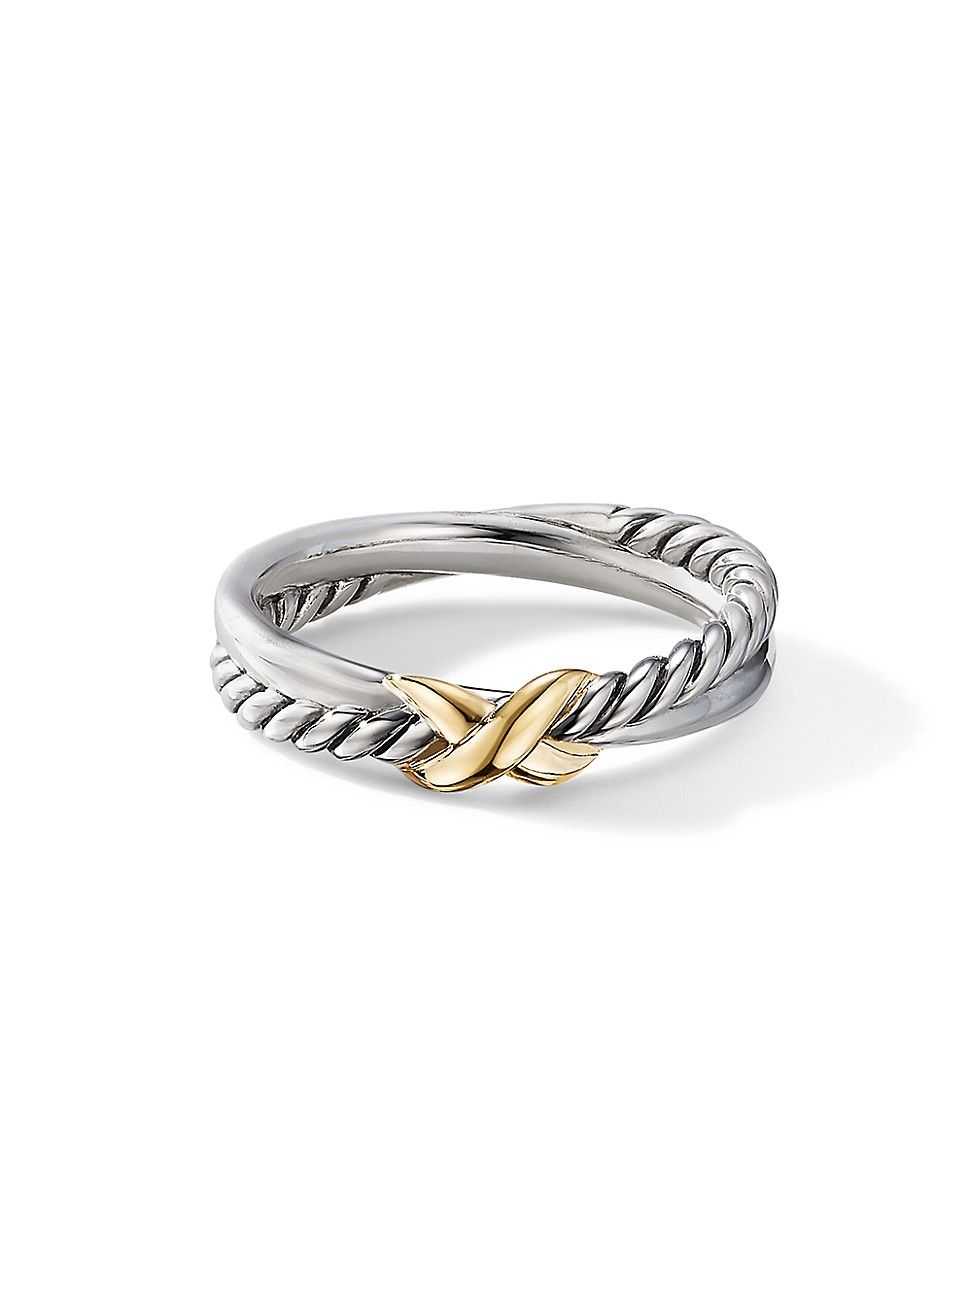 David Yurman Women's Petite X Ring With 18K Yellow Gold - Gold Silver - Size 7 | Saks Fifth Avenue